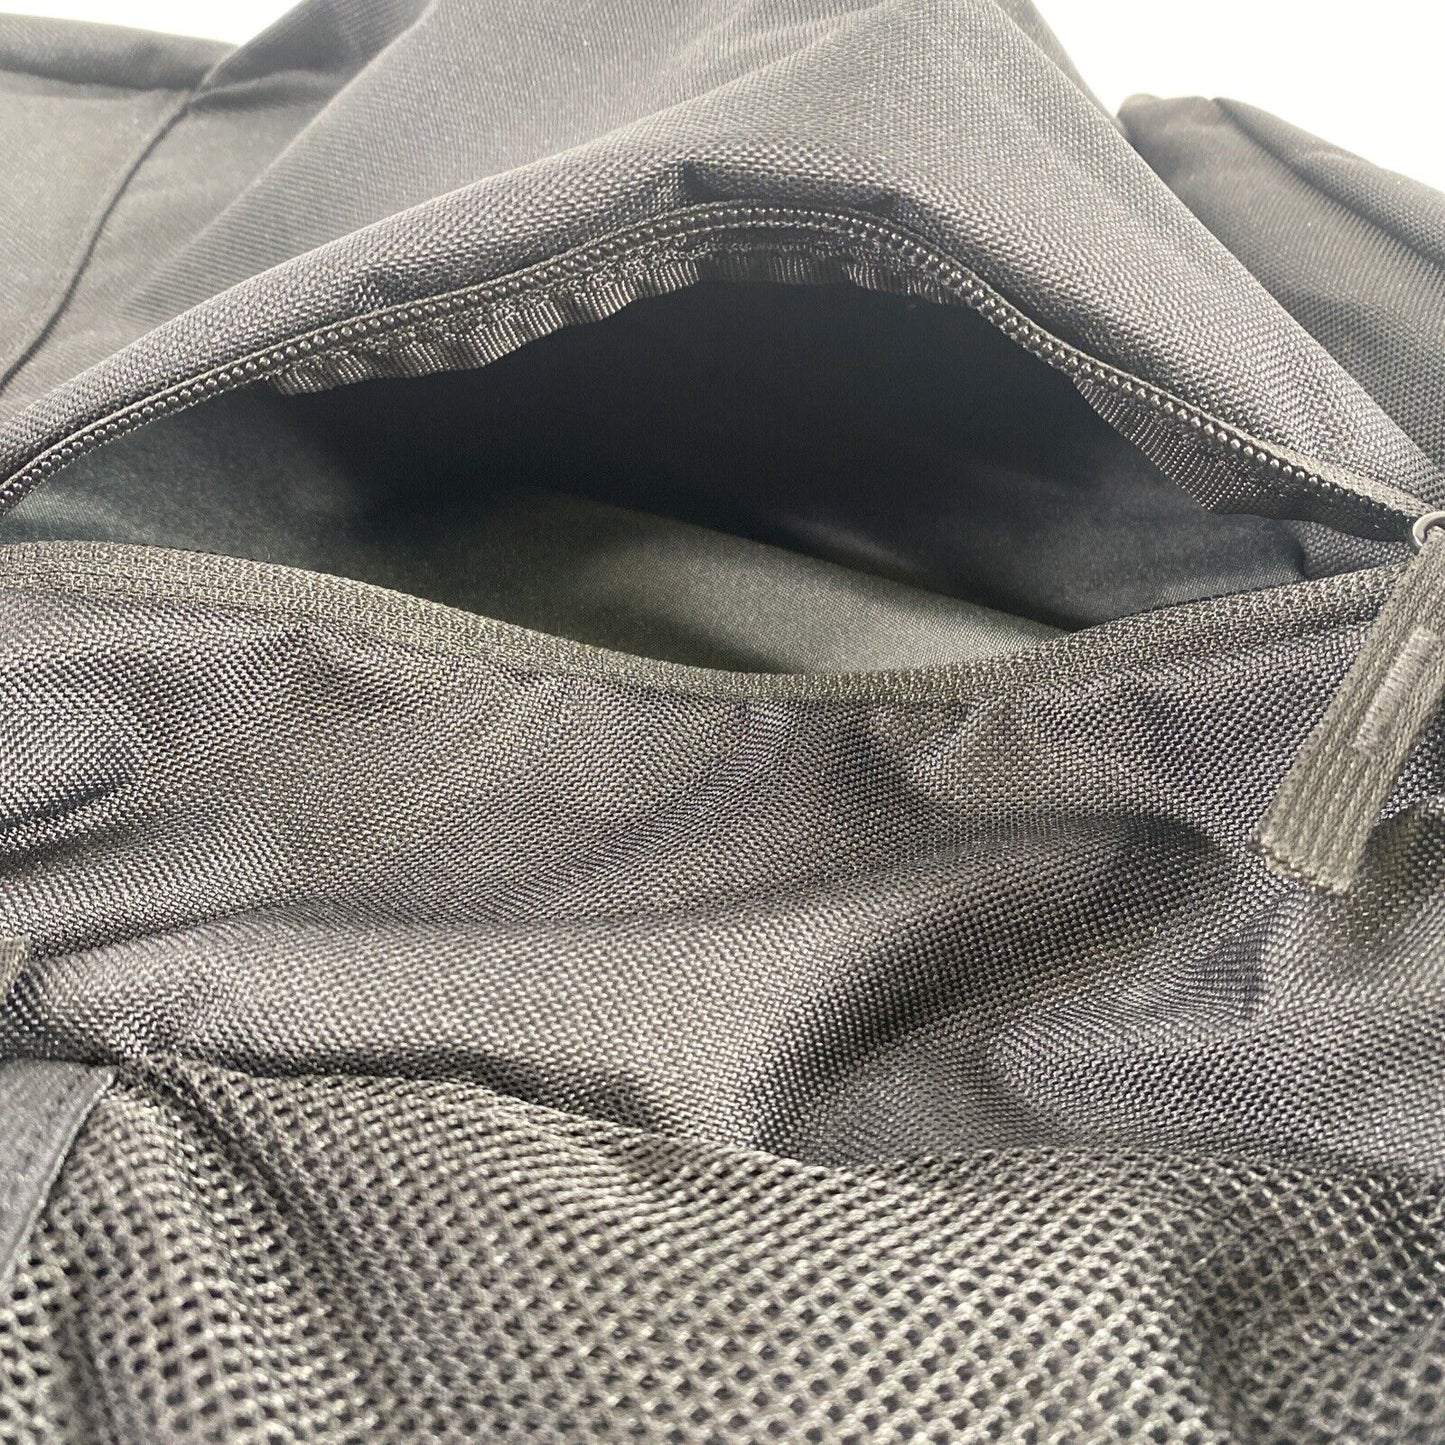 Nike Black Aid Jordan Basic Backpack School Bag